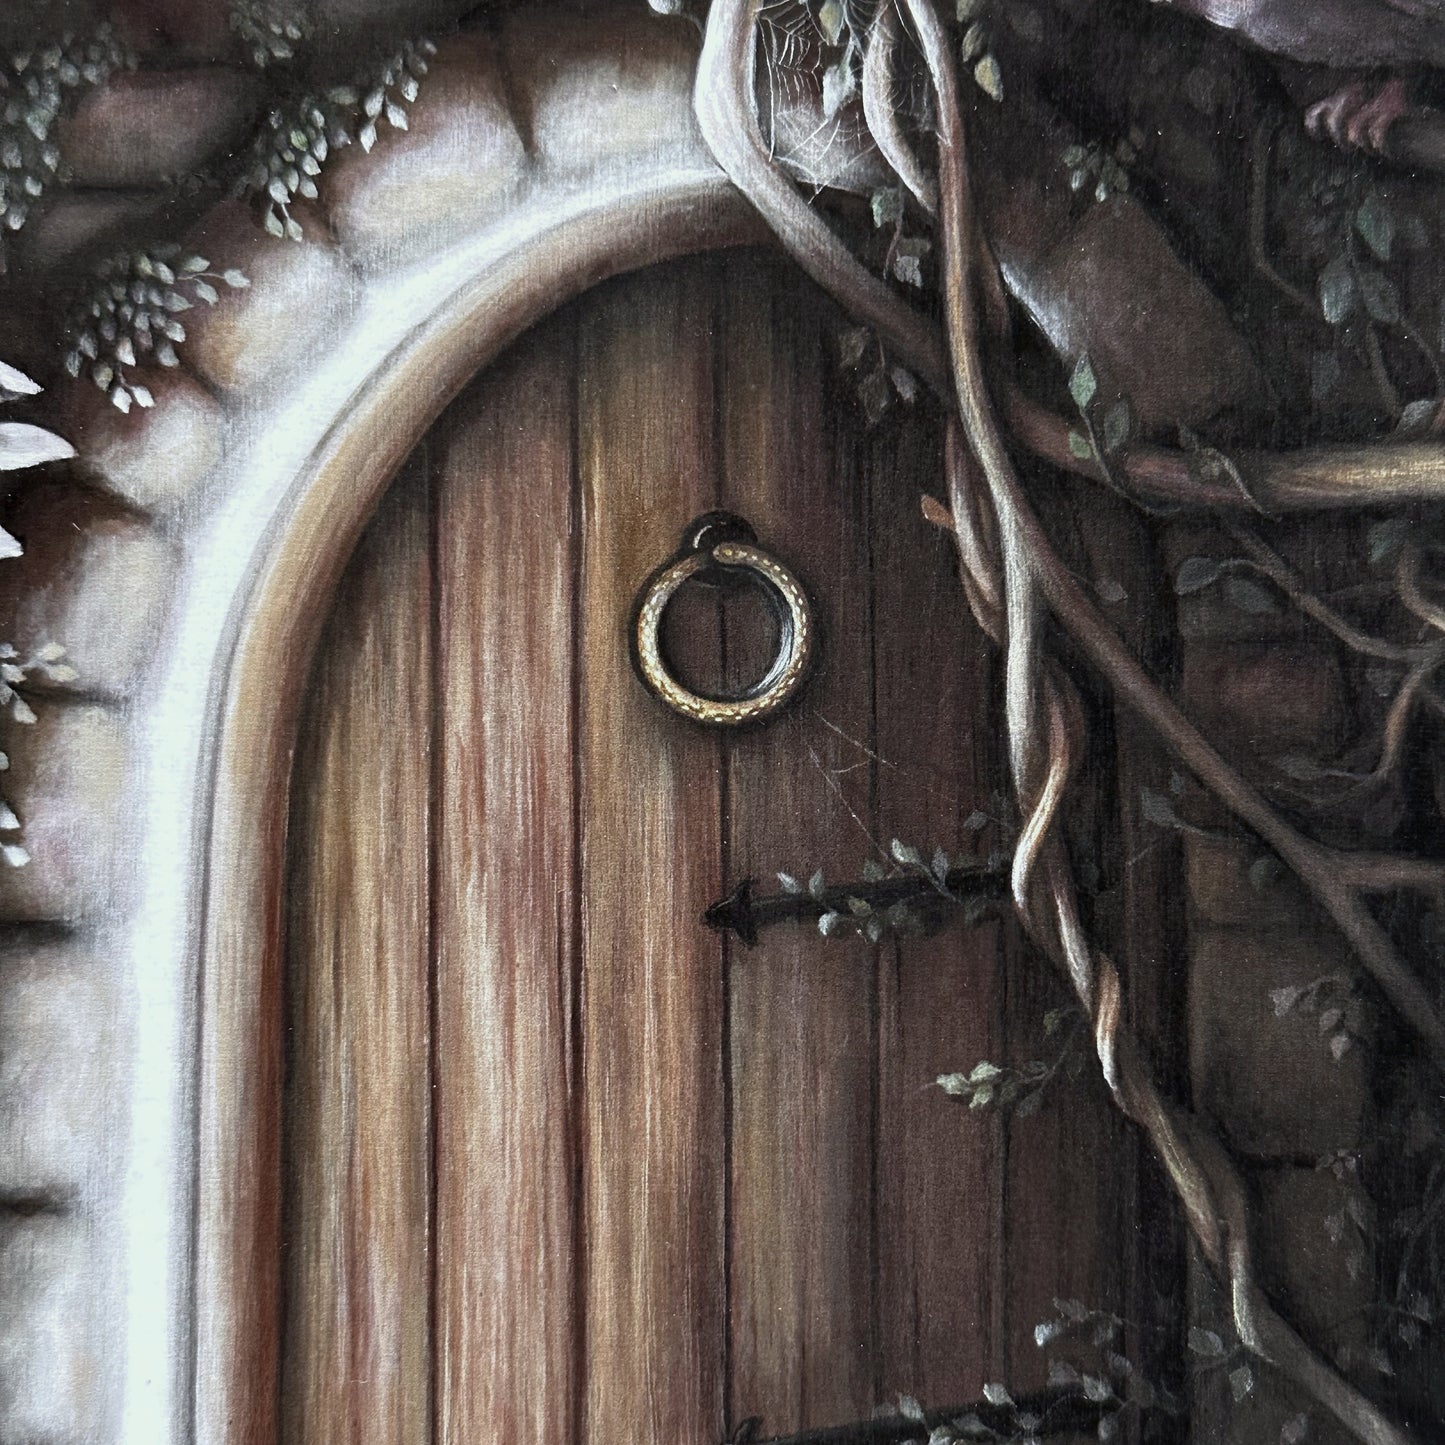 Open Edition "A Curious Door" 9x12 print